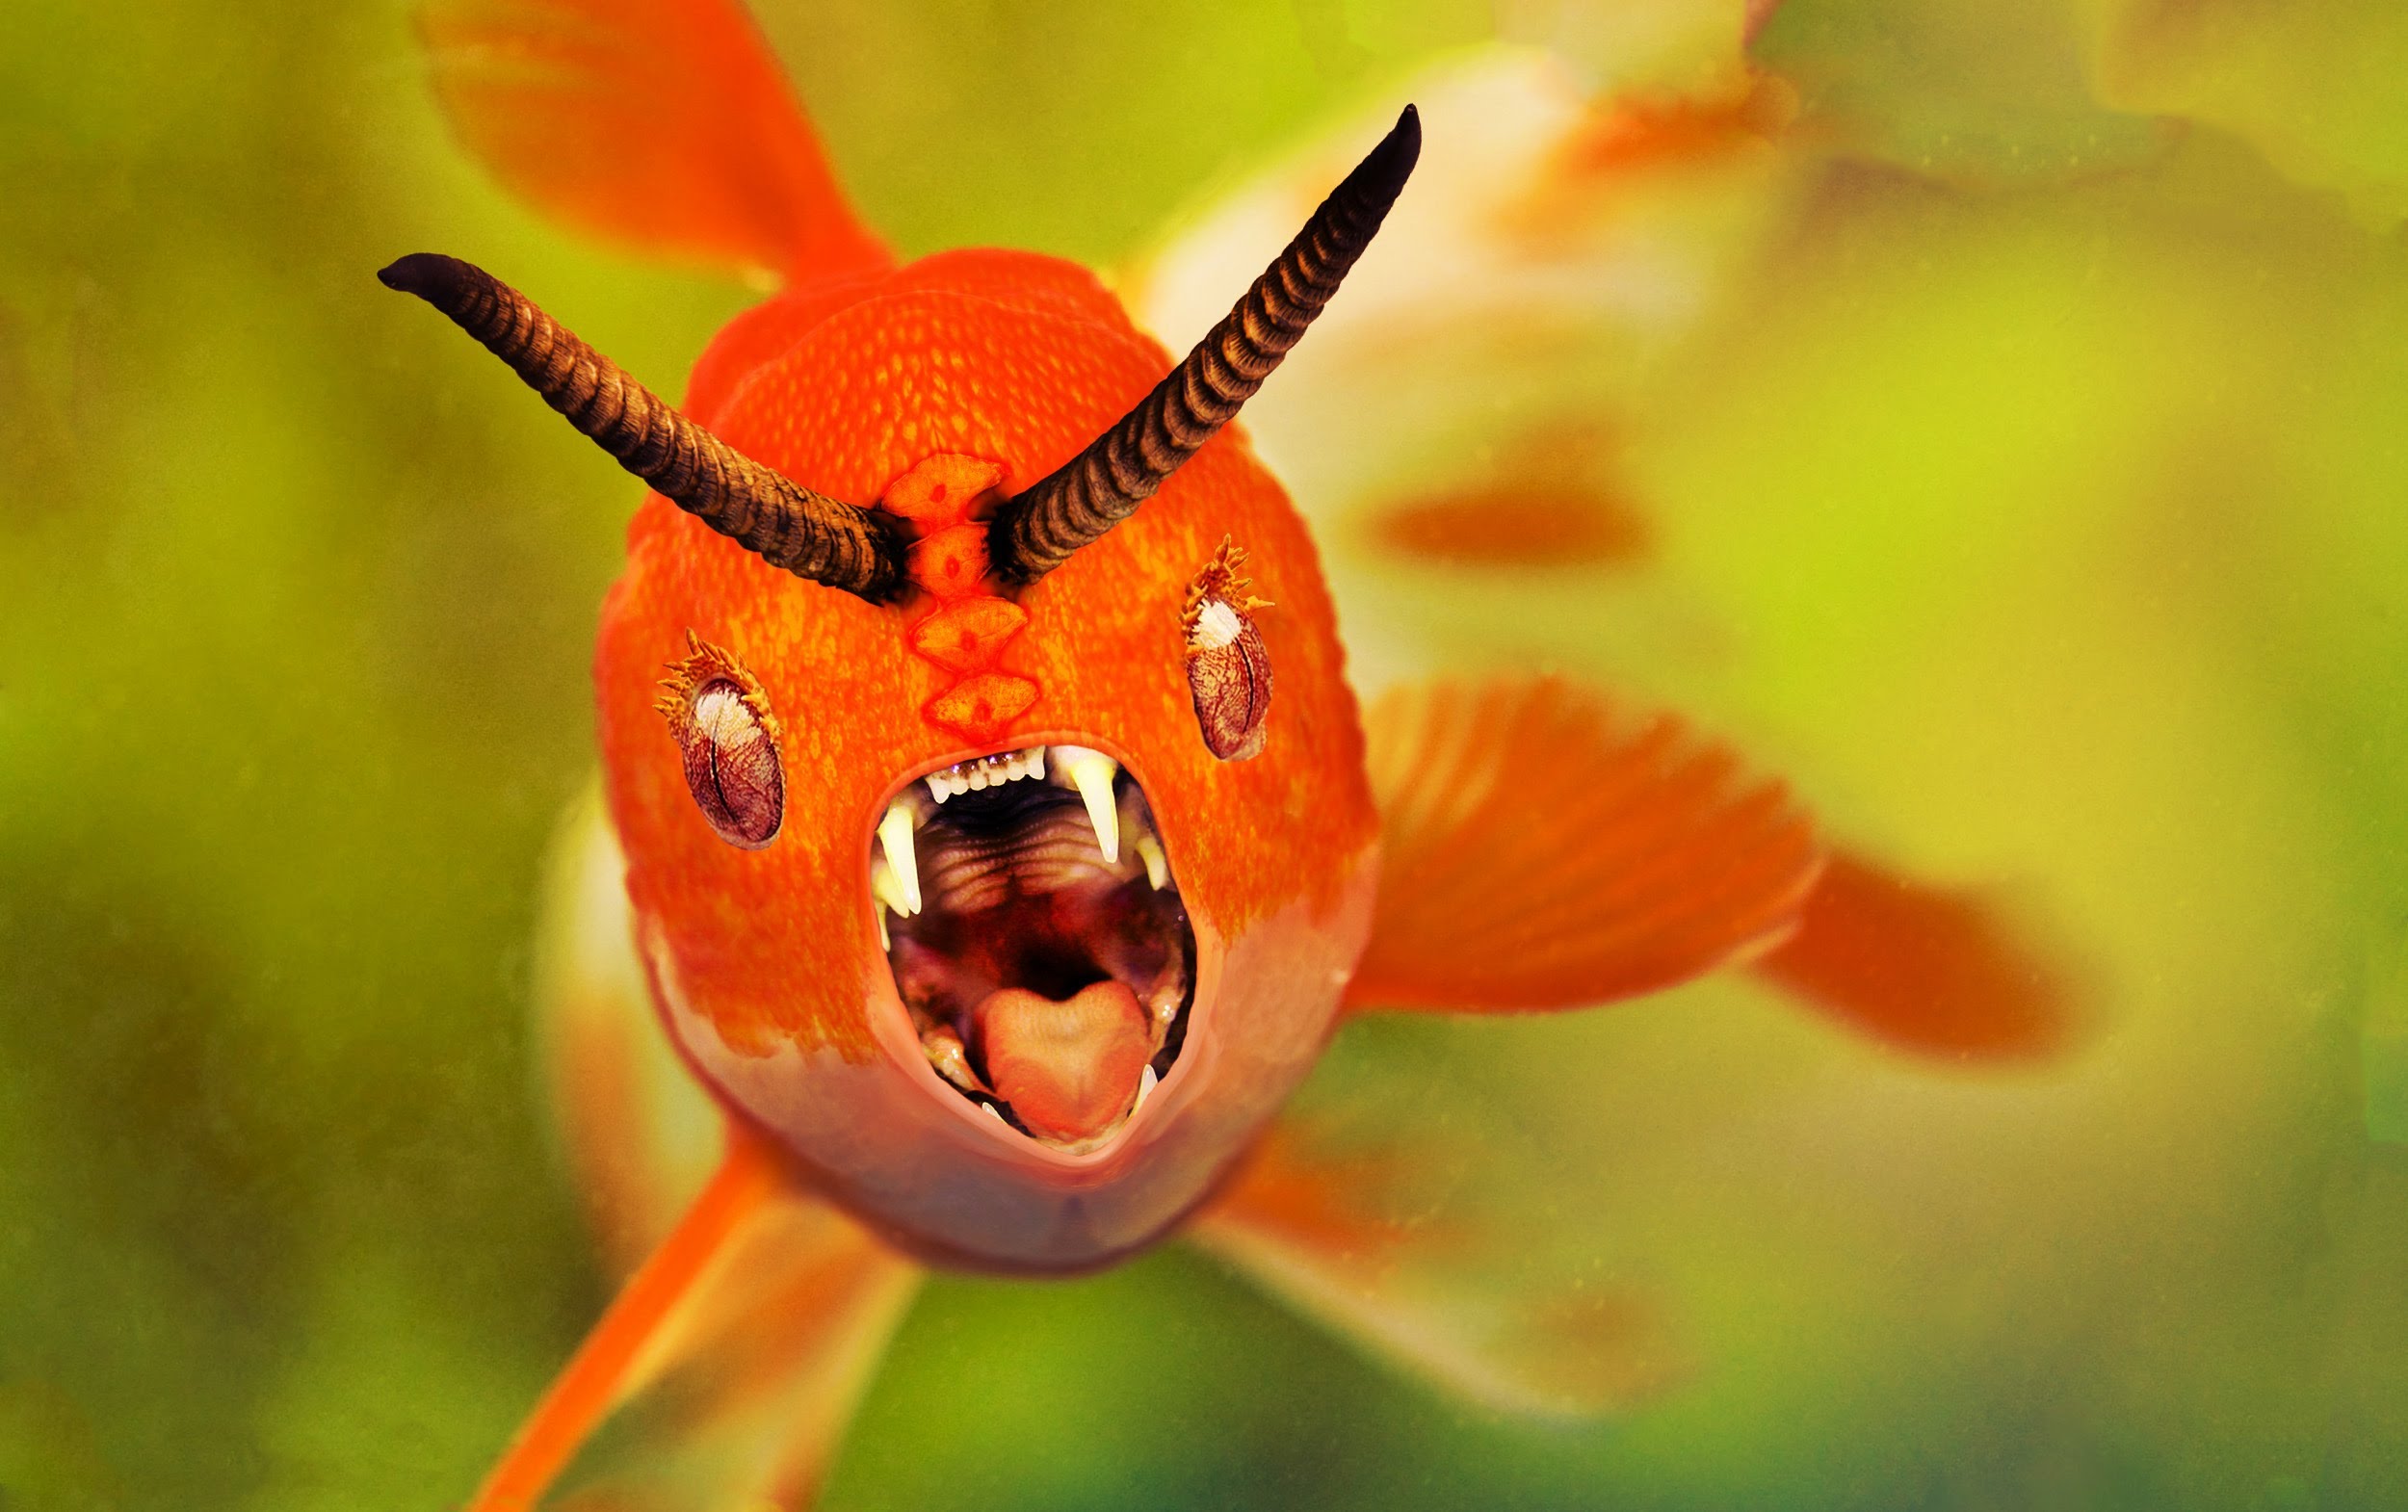 Devil fish photo